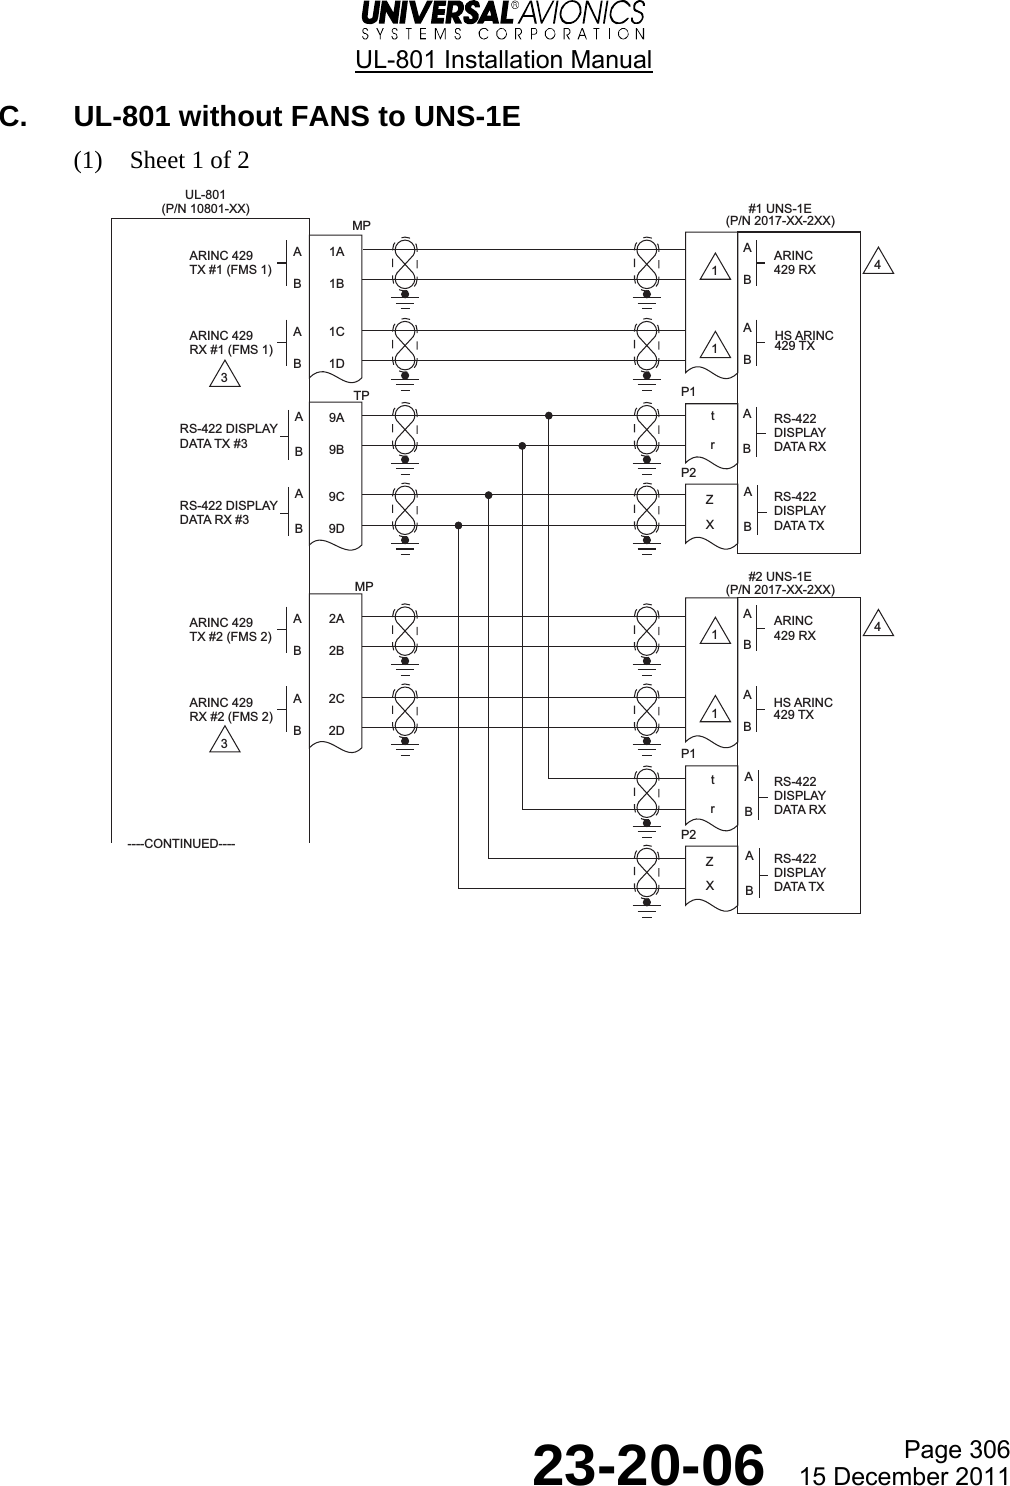  UL-801 Installation Manual  Page 306  23-20-06  15 December 2011 C.  UL-801 without FANS to UNS-1E (1) Sheet 1 of 2   UL-801(P/N 10801-XX)A1AB1BARINC 429TX #1 (FMS 1)ABARINC429 RXA1CB1DARINC 429RX #1 (FMS 1)ABHS ARINC429 TX#2 UNS-1E(P/N 2017-XX-2XX)ABARINC429 RXA2CB2DARINC 429RX #2 (FMS 2)ABHS ARINC429 TXMP----CONTINUED----A2AB2BARINC 429TX #2 (FMS 2)RS-422 DISPLAYDATA TX #3RS-422 DISPLAYDATA RX #39A9BRS-422DISPLAYDATA RX9C9DRS-422DISPLAYDATA TXRS-422DISPLAYDATA RXRS-422DISPLAYDATA TXMPTPZXZXP1P2P1P233441111#1 UNS-1E(P/N 2017-XX-2XX)ABABABABrtrtABAB